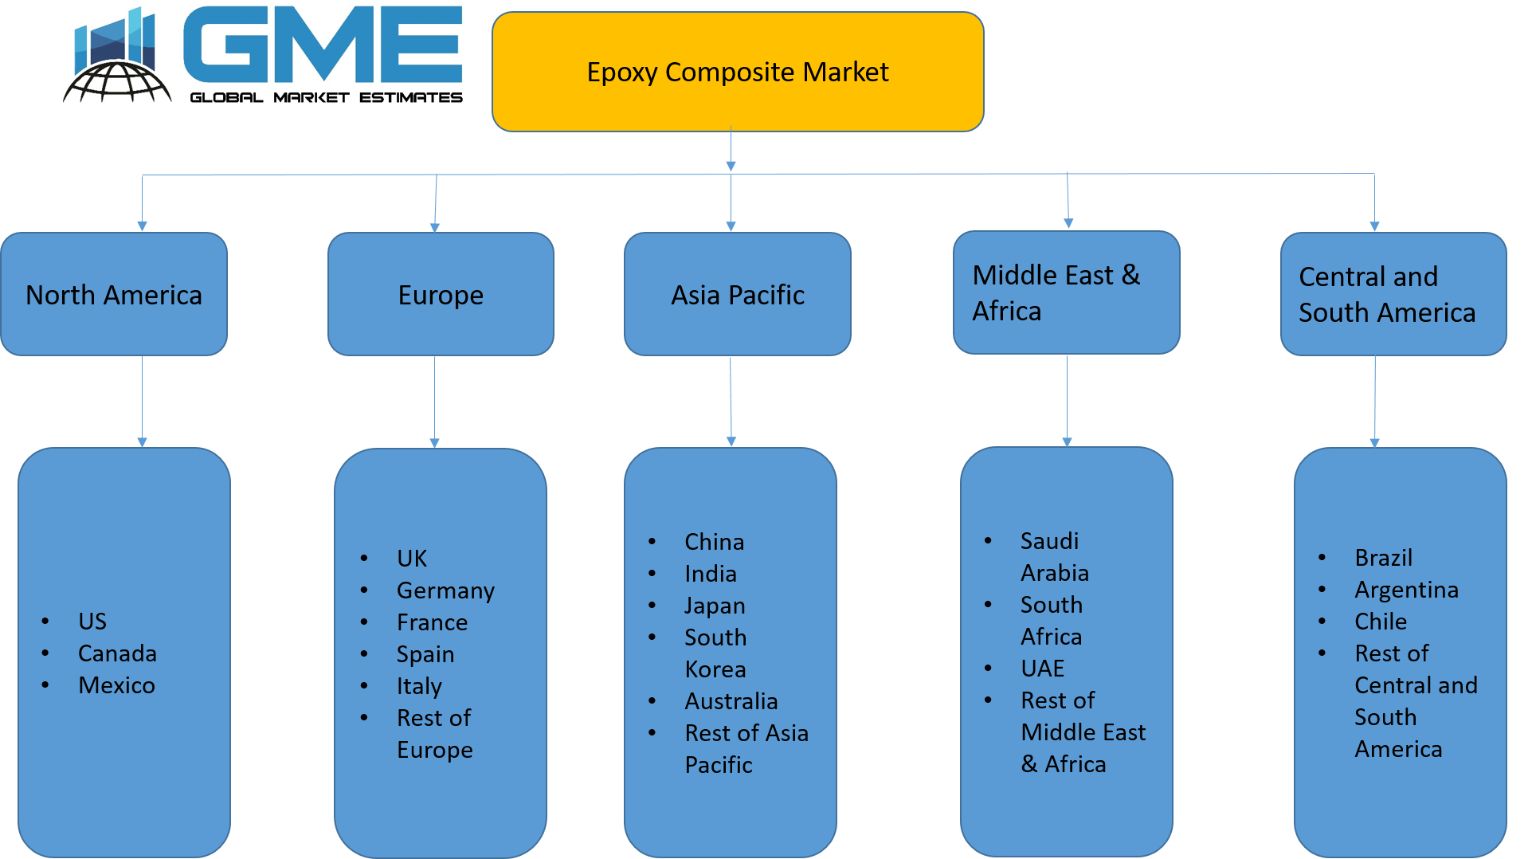 Epoxy Composite Market - Regional Analysis